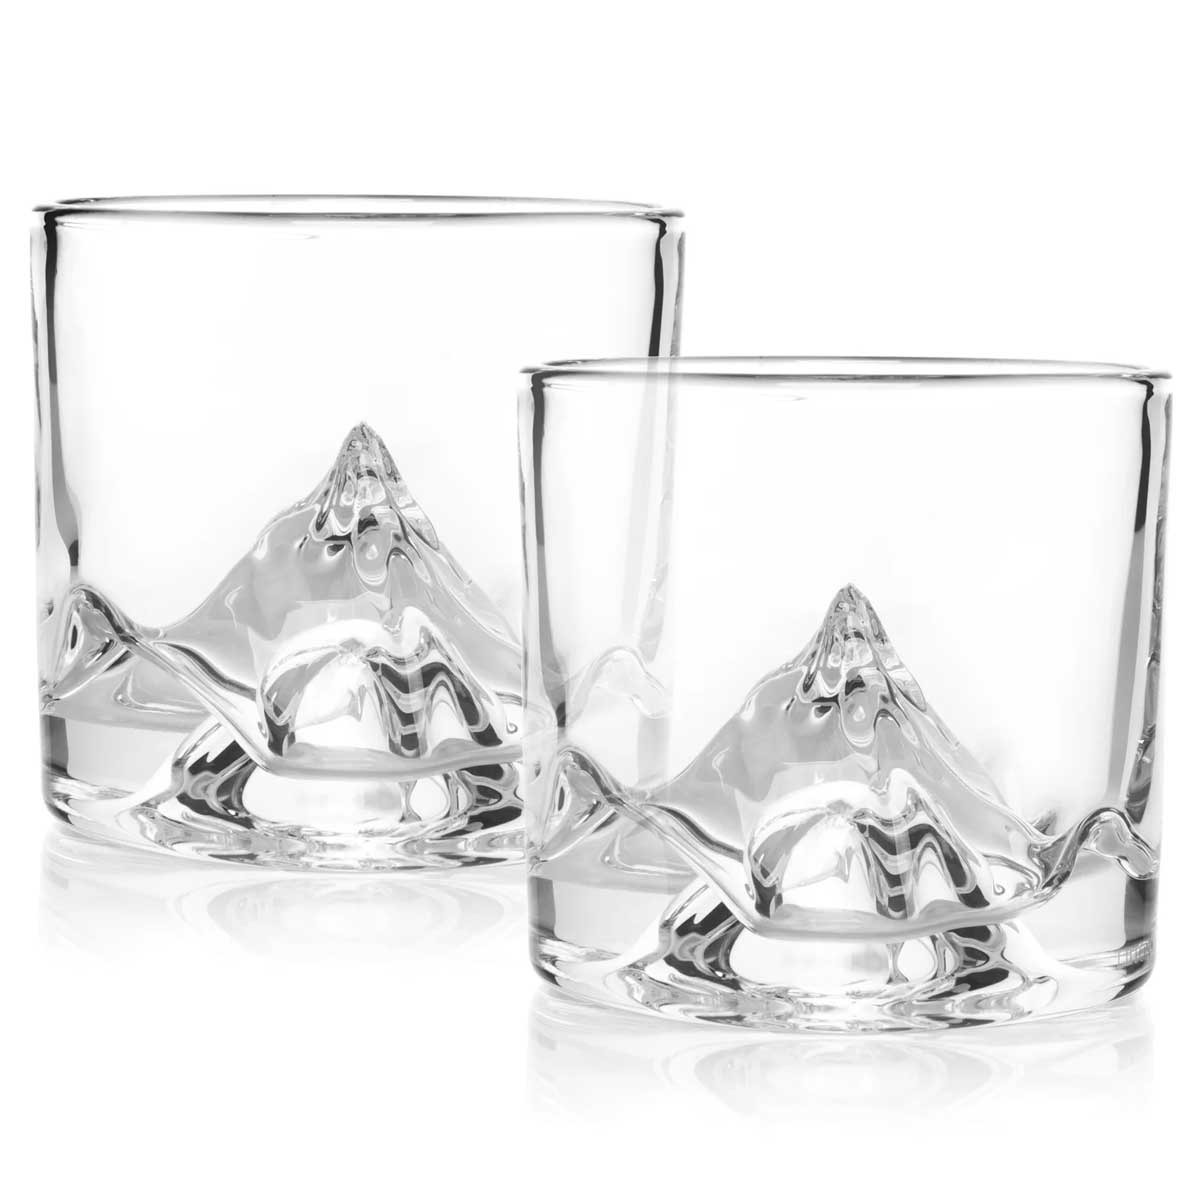 Набор для виски Liiton K2 2 предмета набор для виски 2 перс 6 пр стаканы кубики стекло р мрамор zero